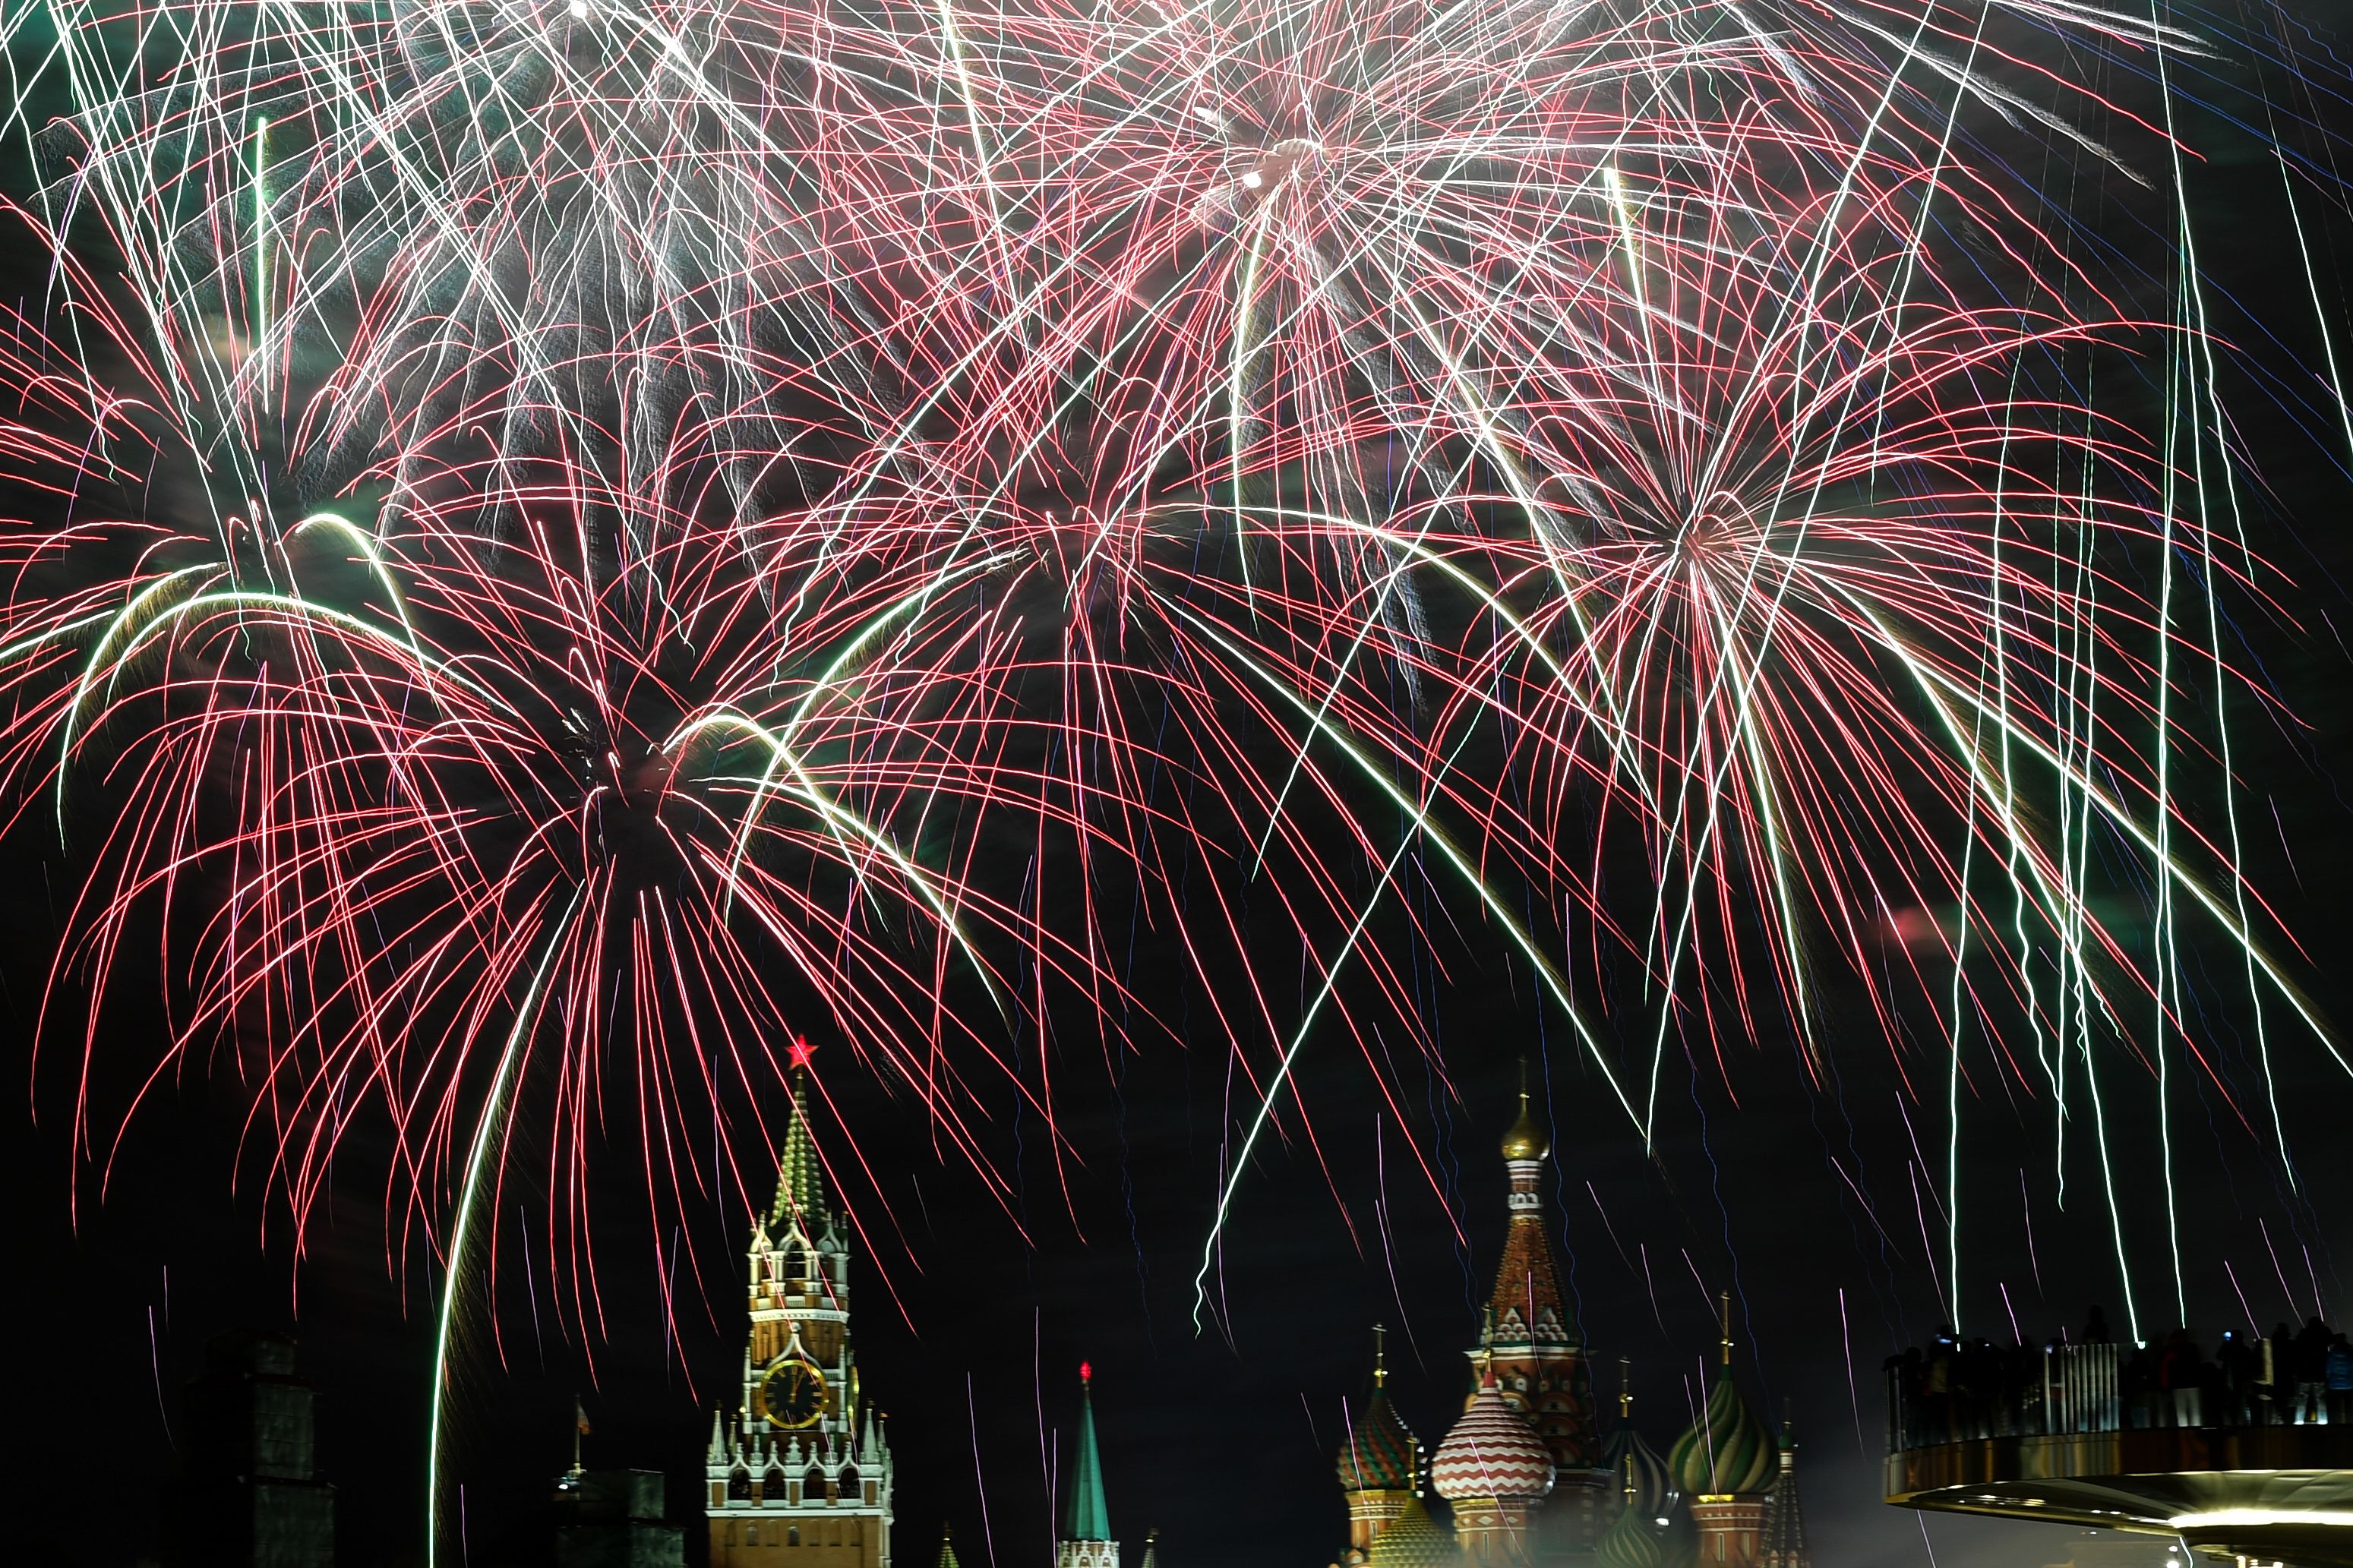 احتفالات موسكو